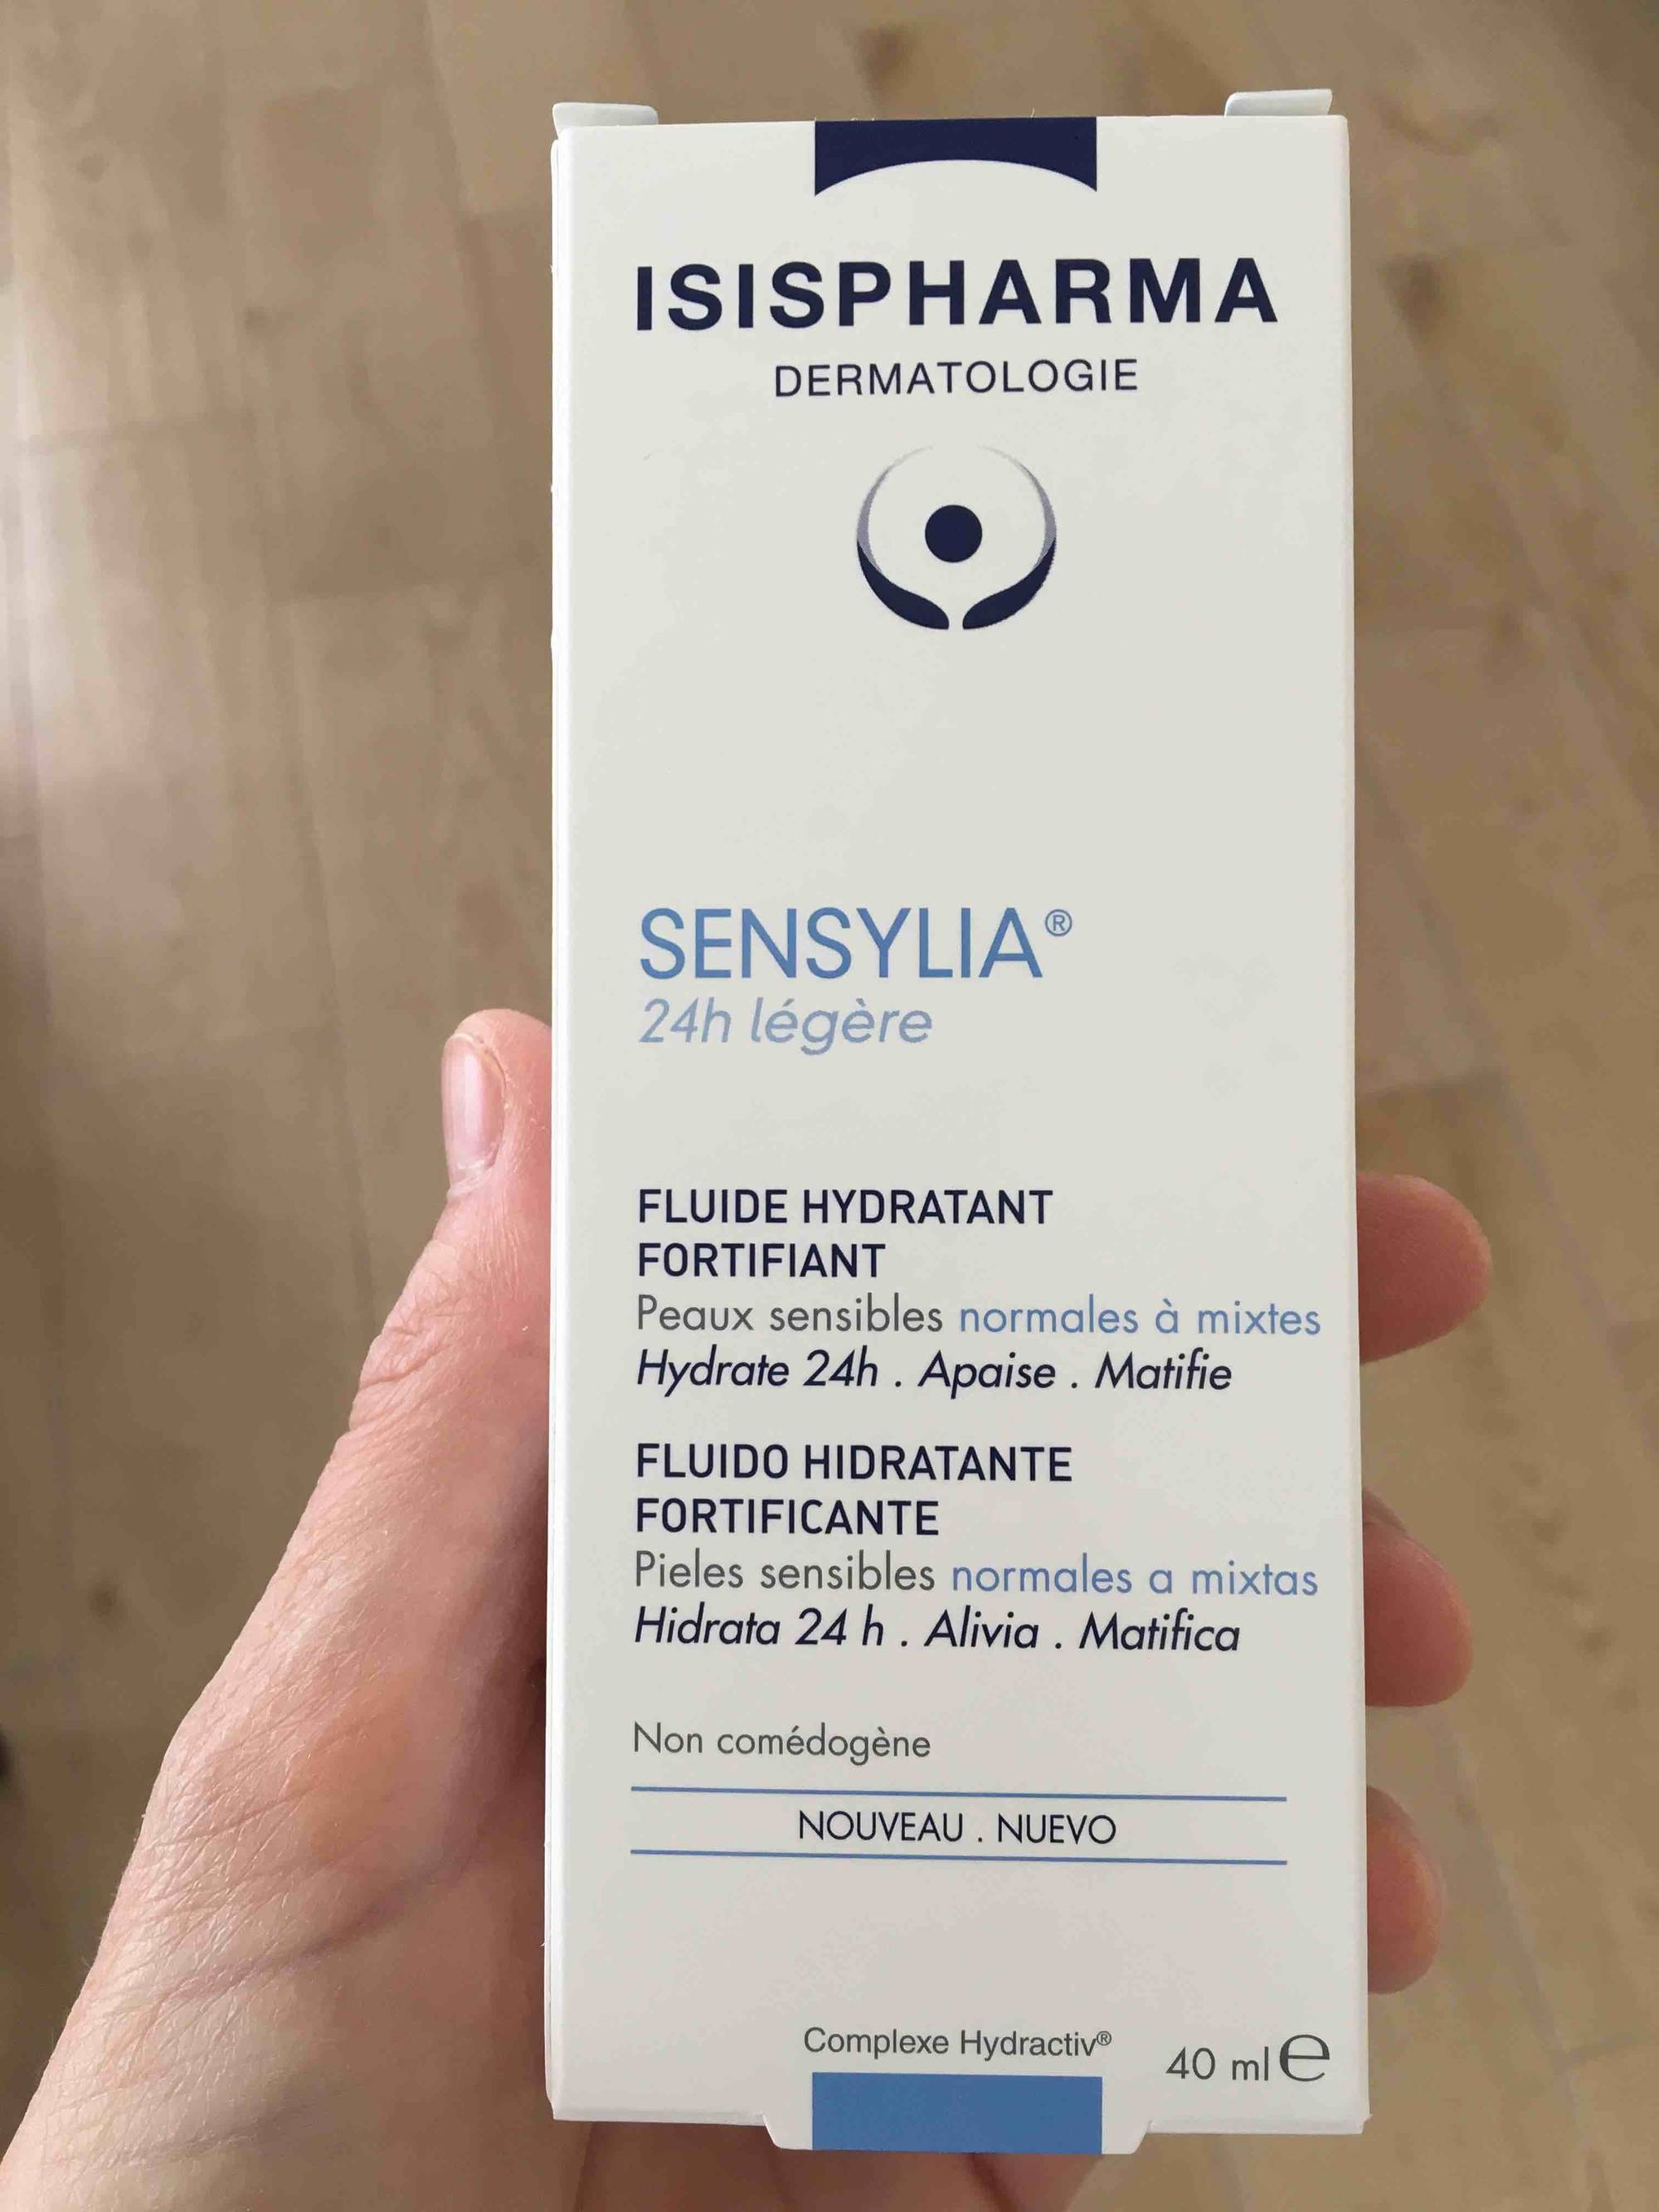 ISIS PHARMA - Sensylia - Fluide hydratant fortifiant